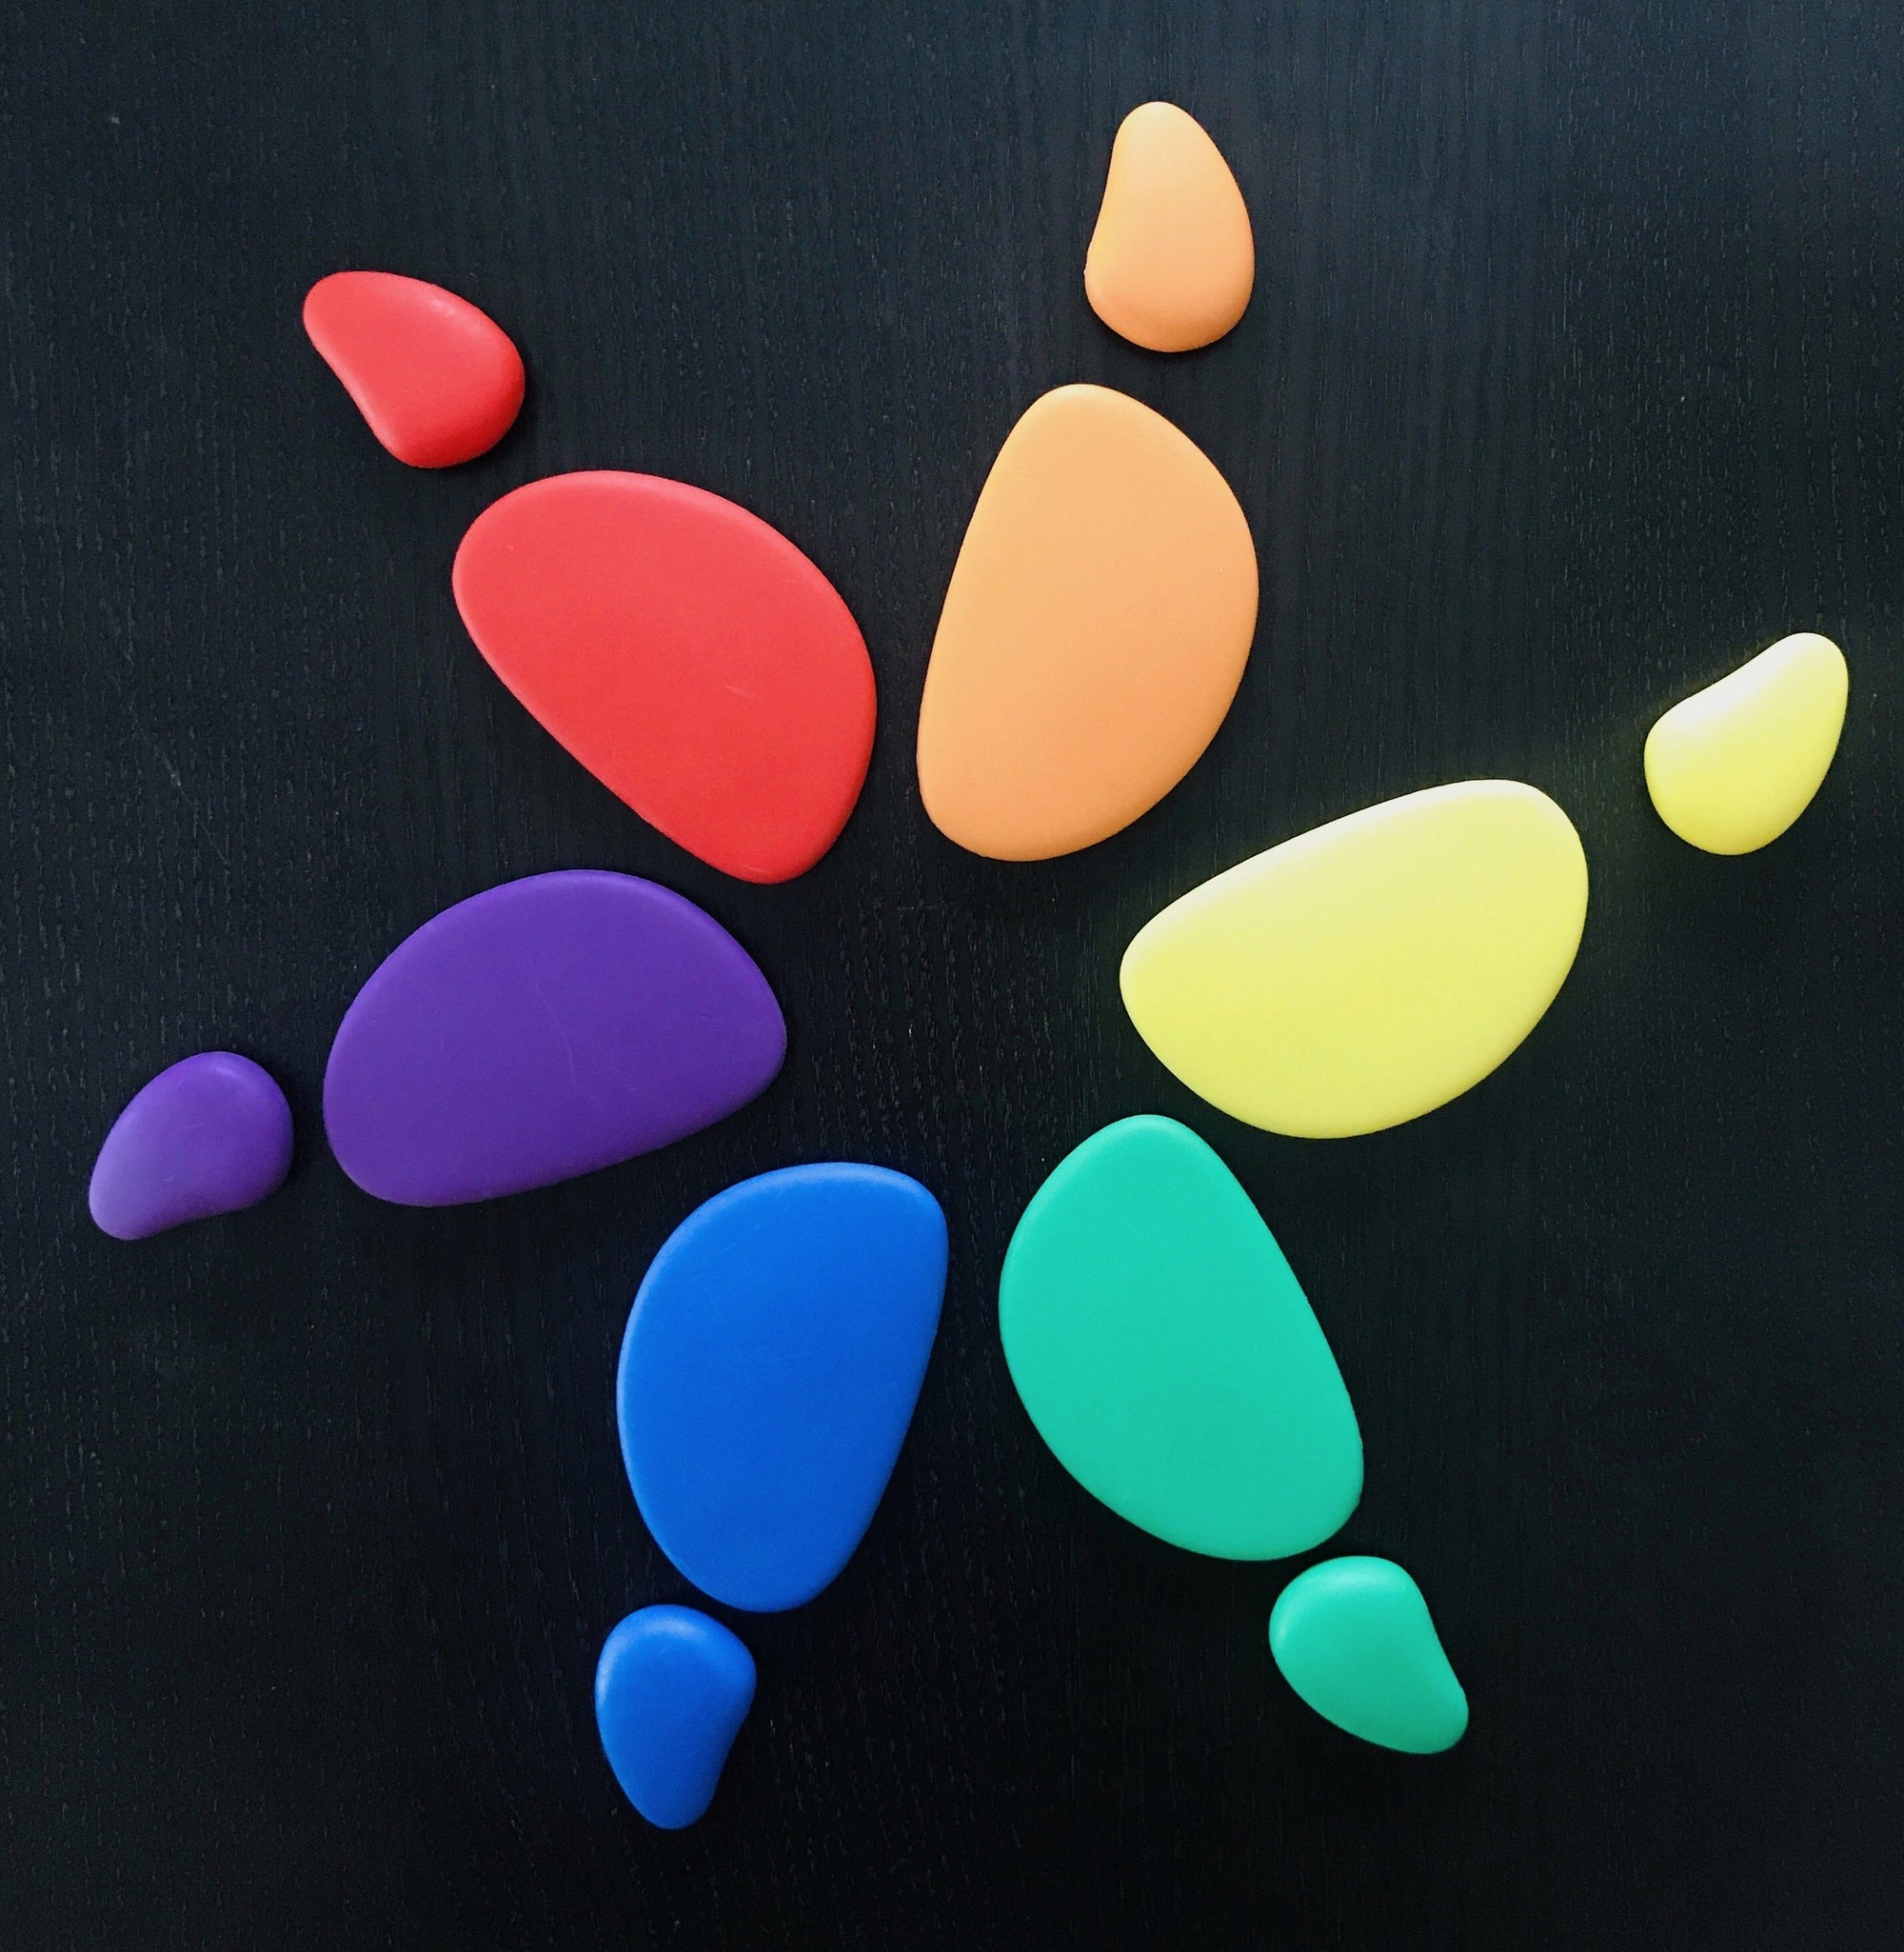 Rainbow Pebbles: First Impressions